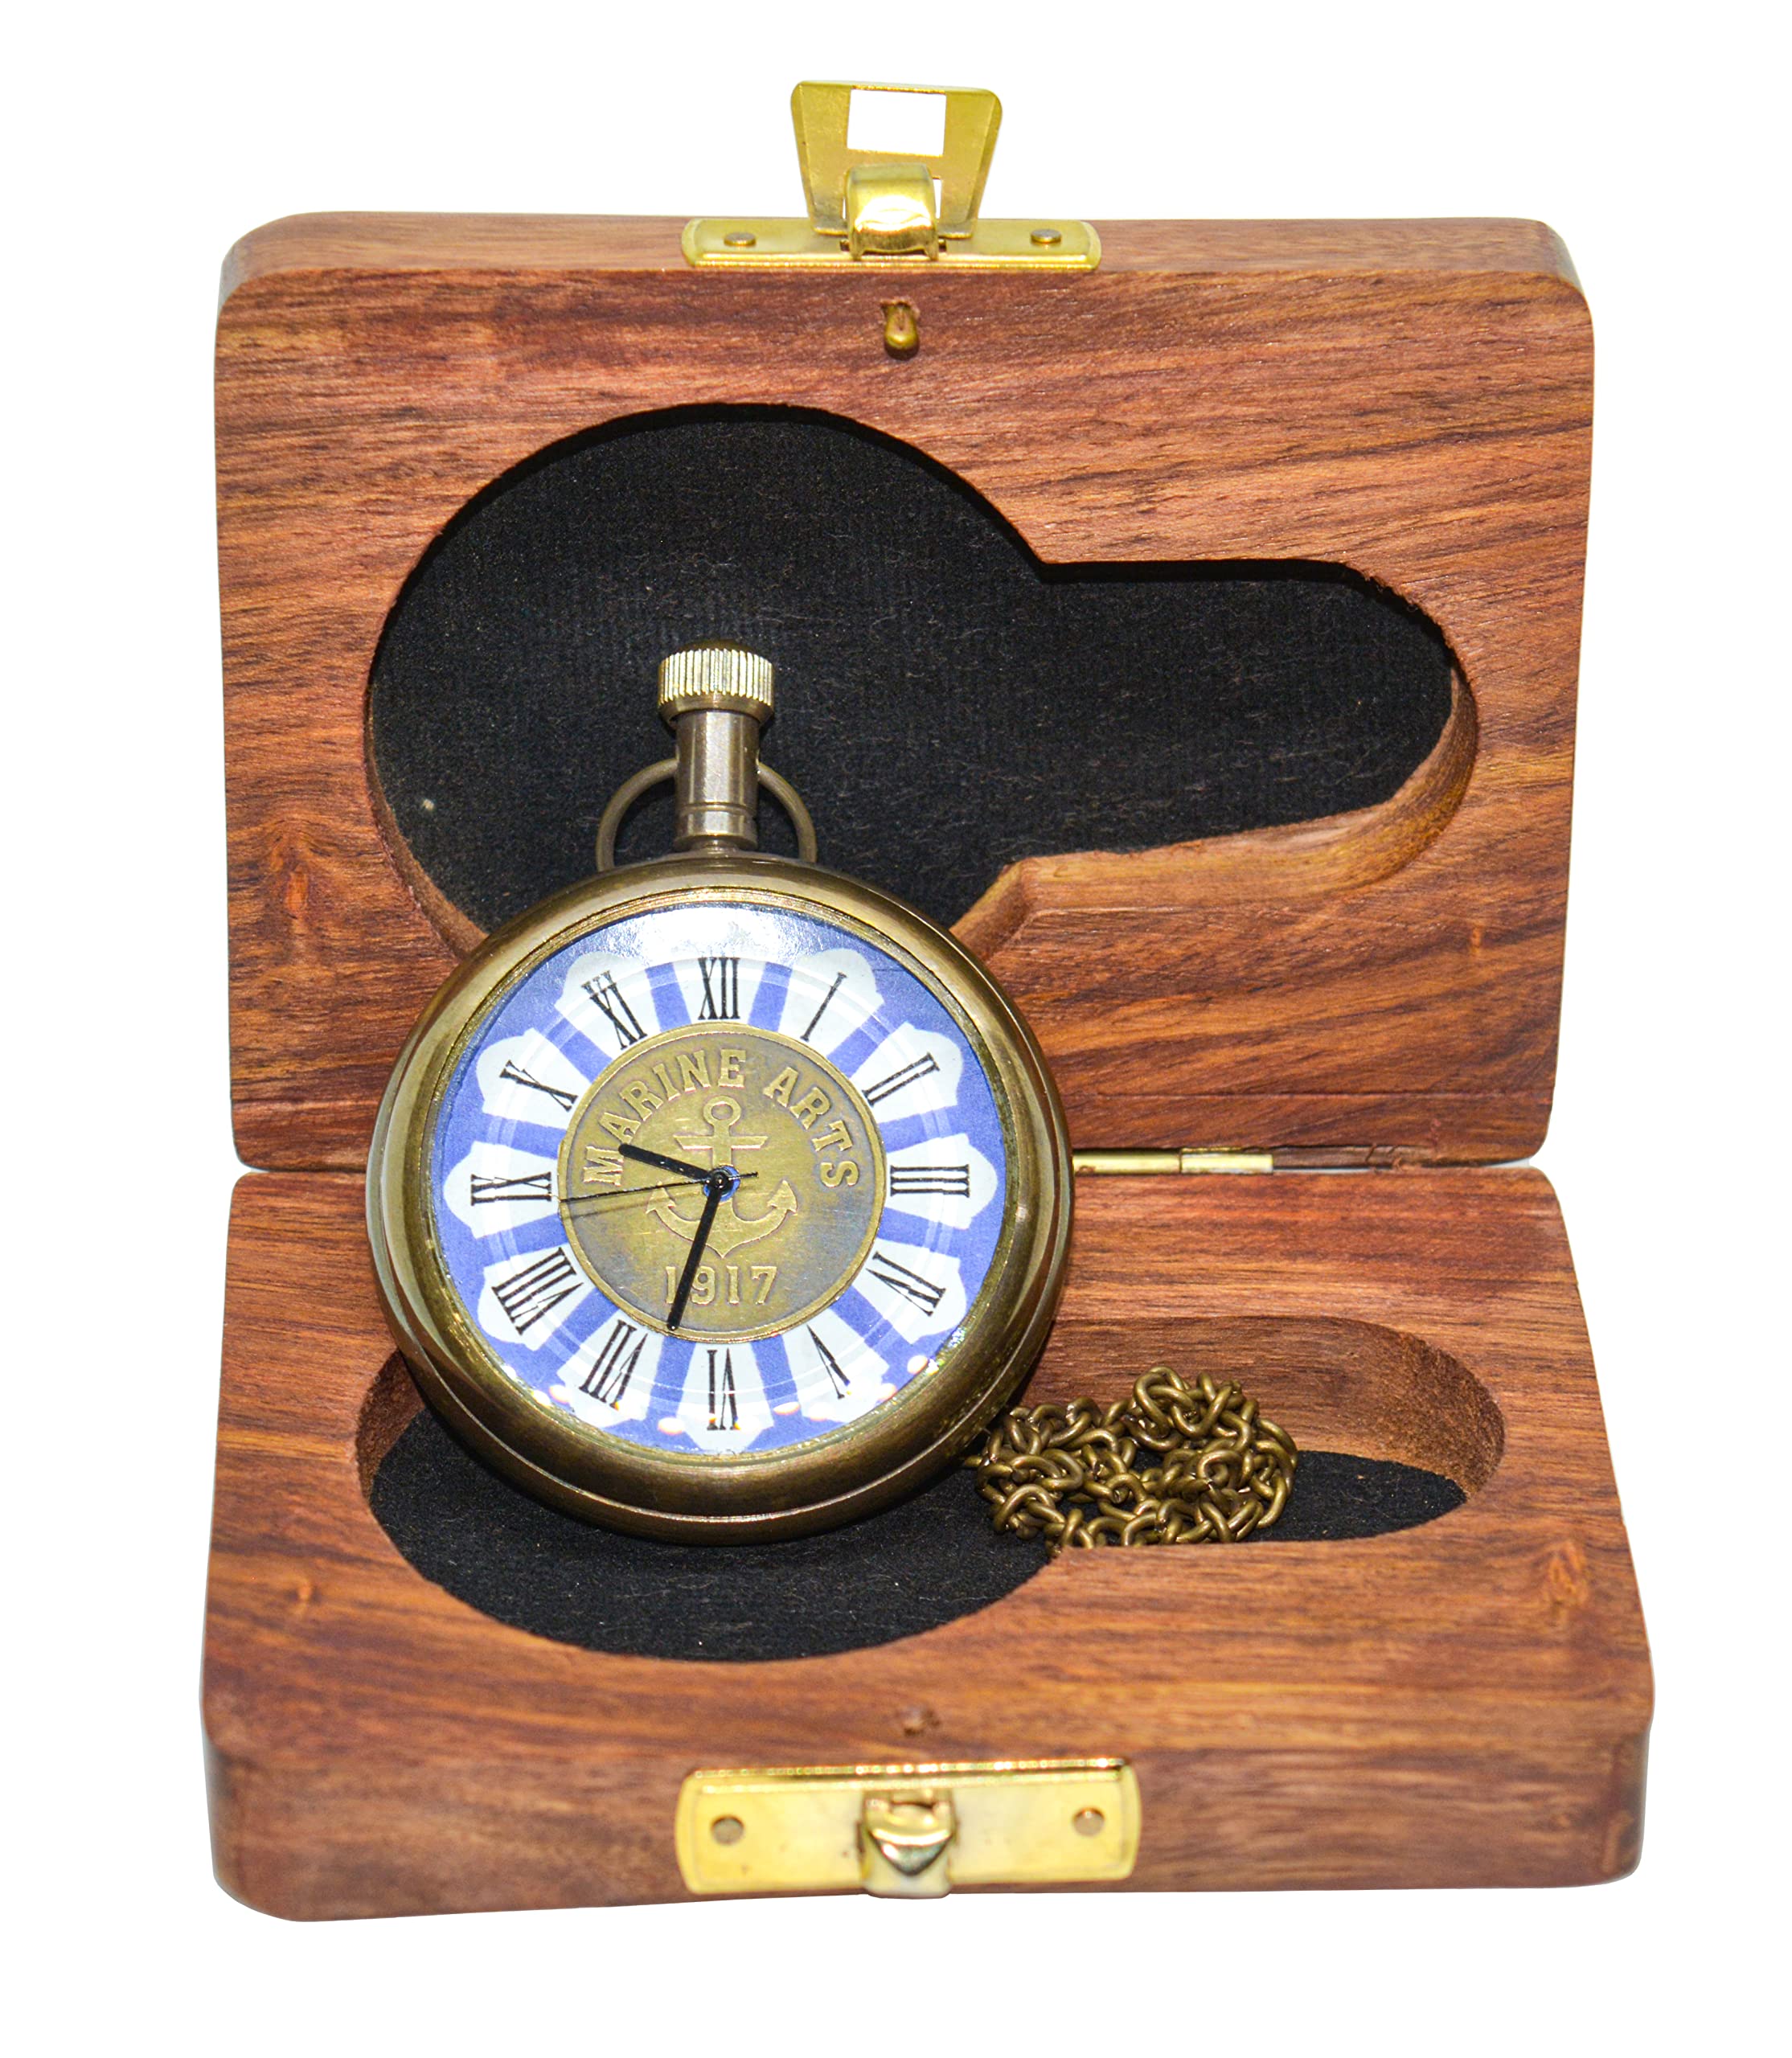 Hassanhandicrafts Antique Vintage Maritime Marine Art Brass Pocket Watch Fob Chronometer with Wooden Box